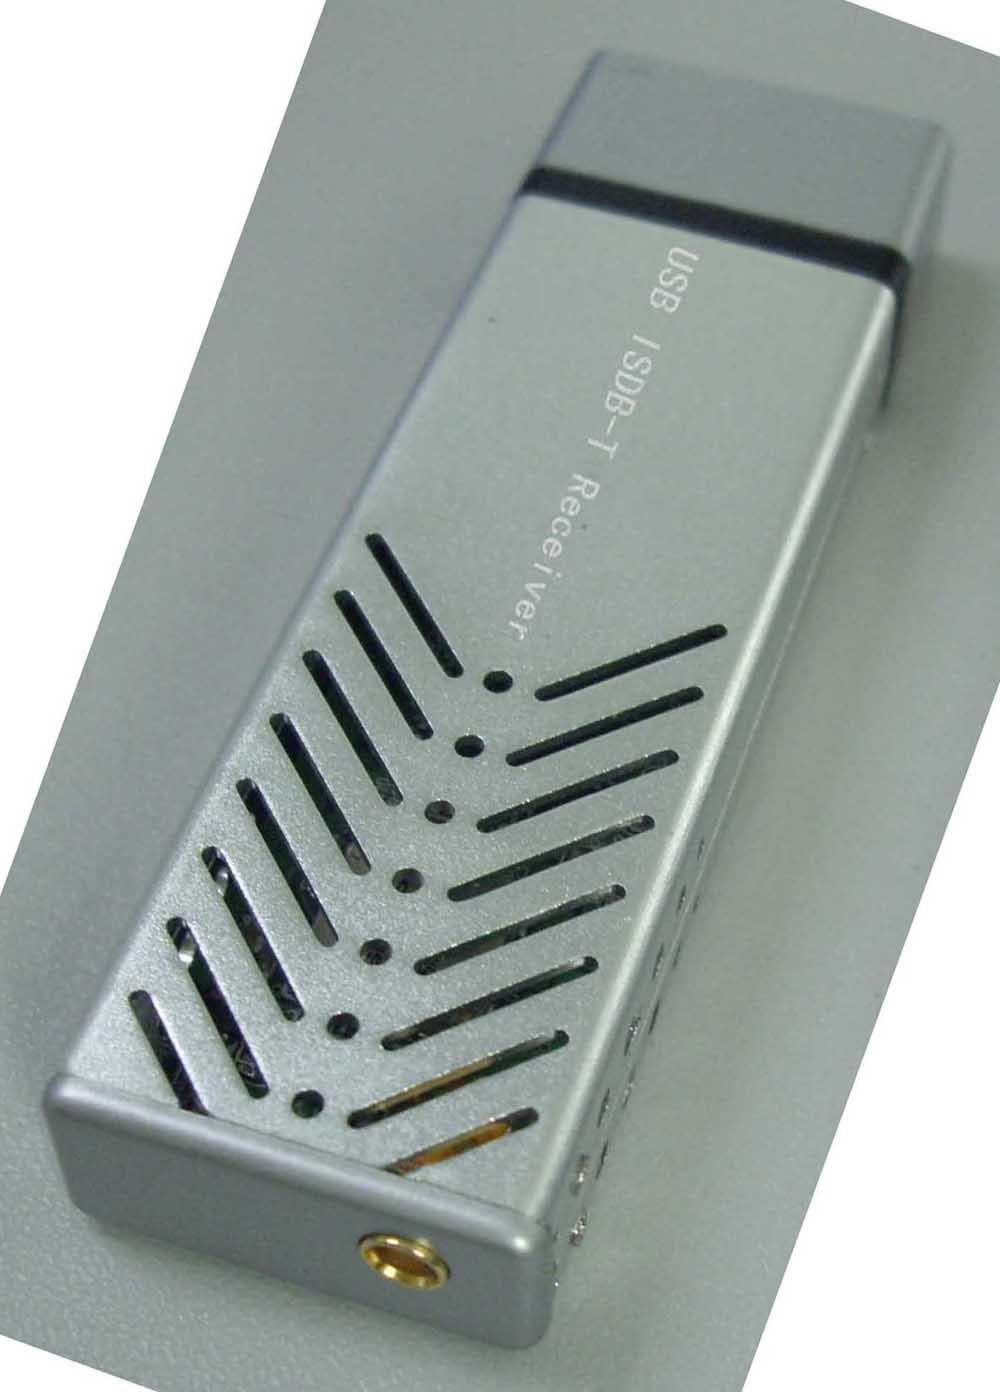  USB Isdb TV Tuner (ИБР USB ТВ-тюнер)